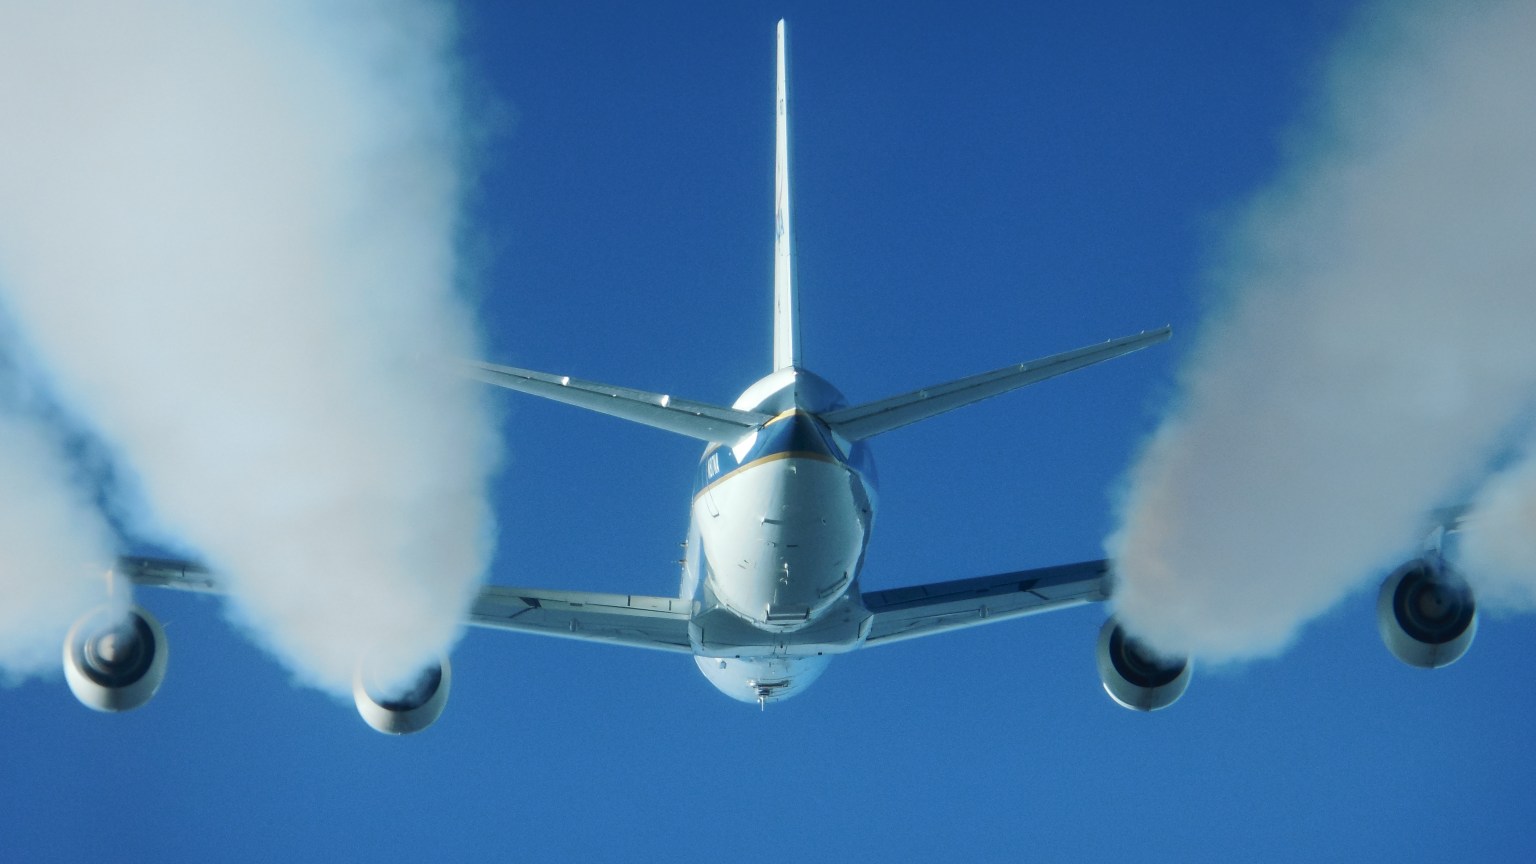 ACCESS Biofuels Flight Tests on NASA's DC-8